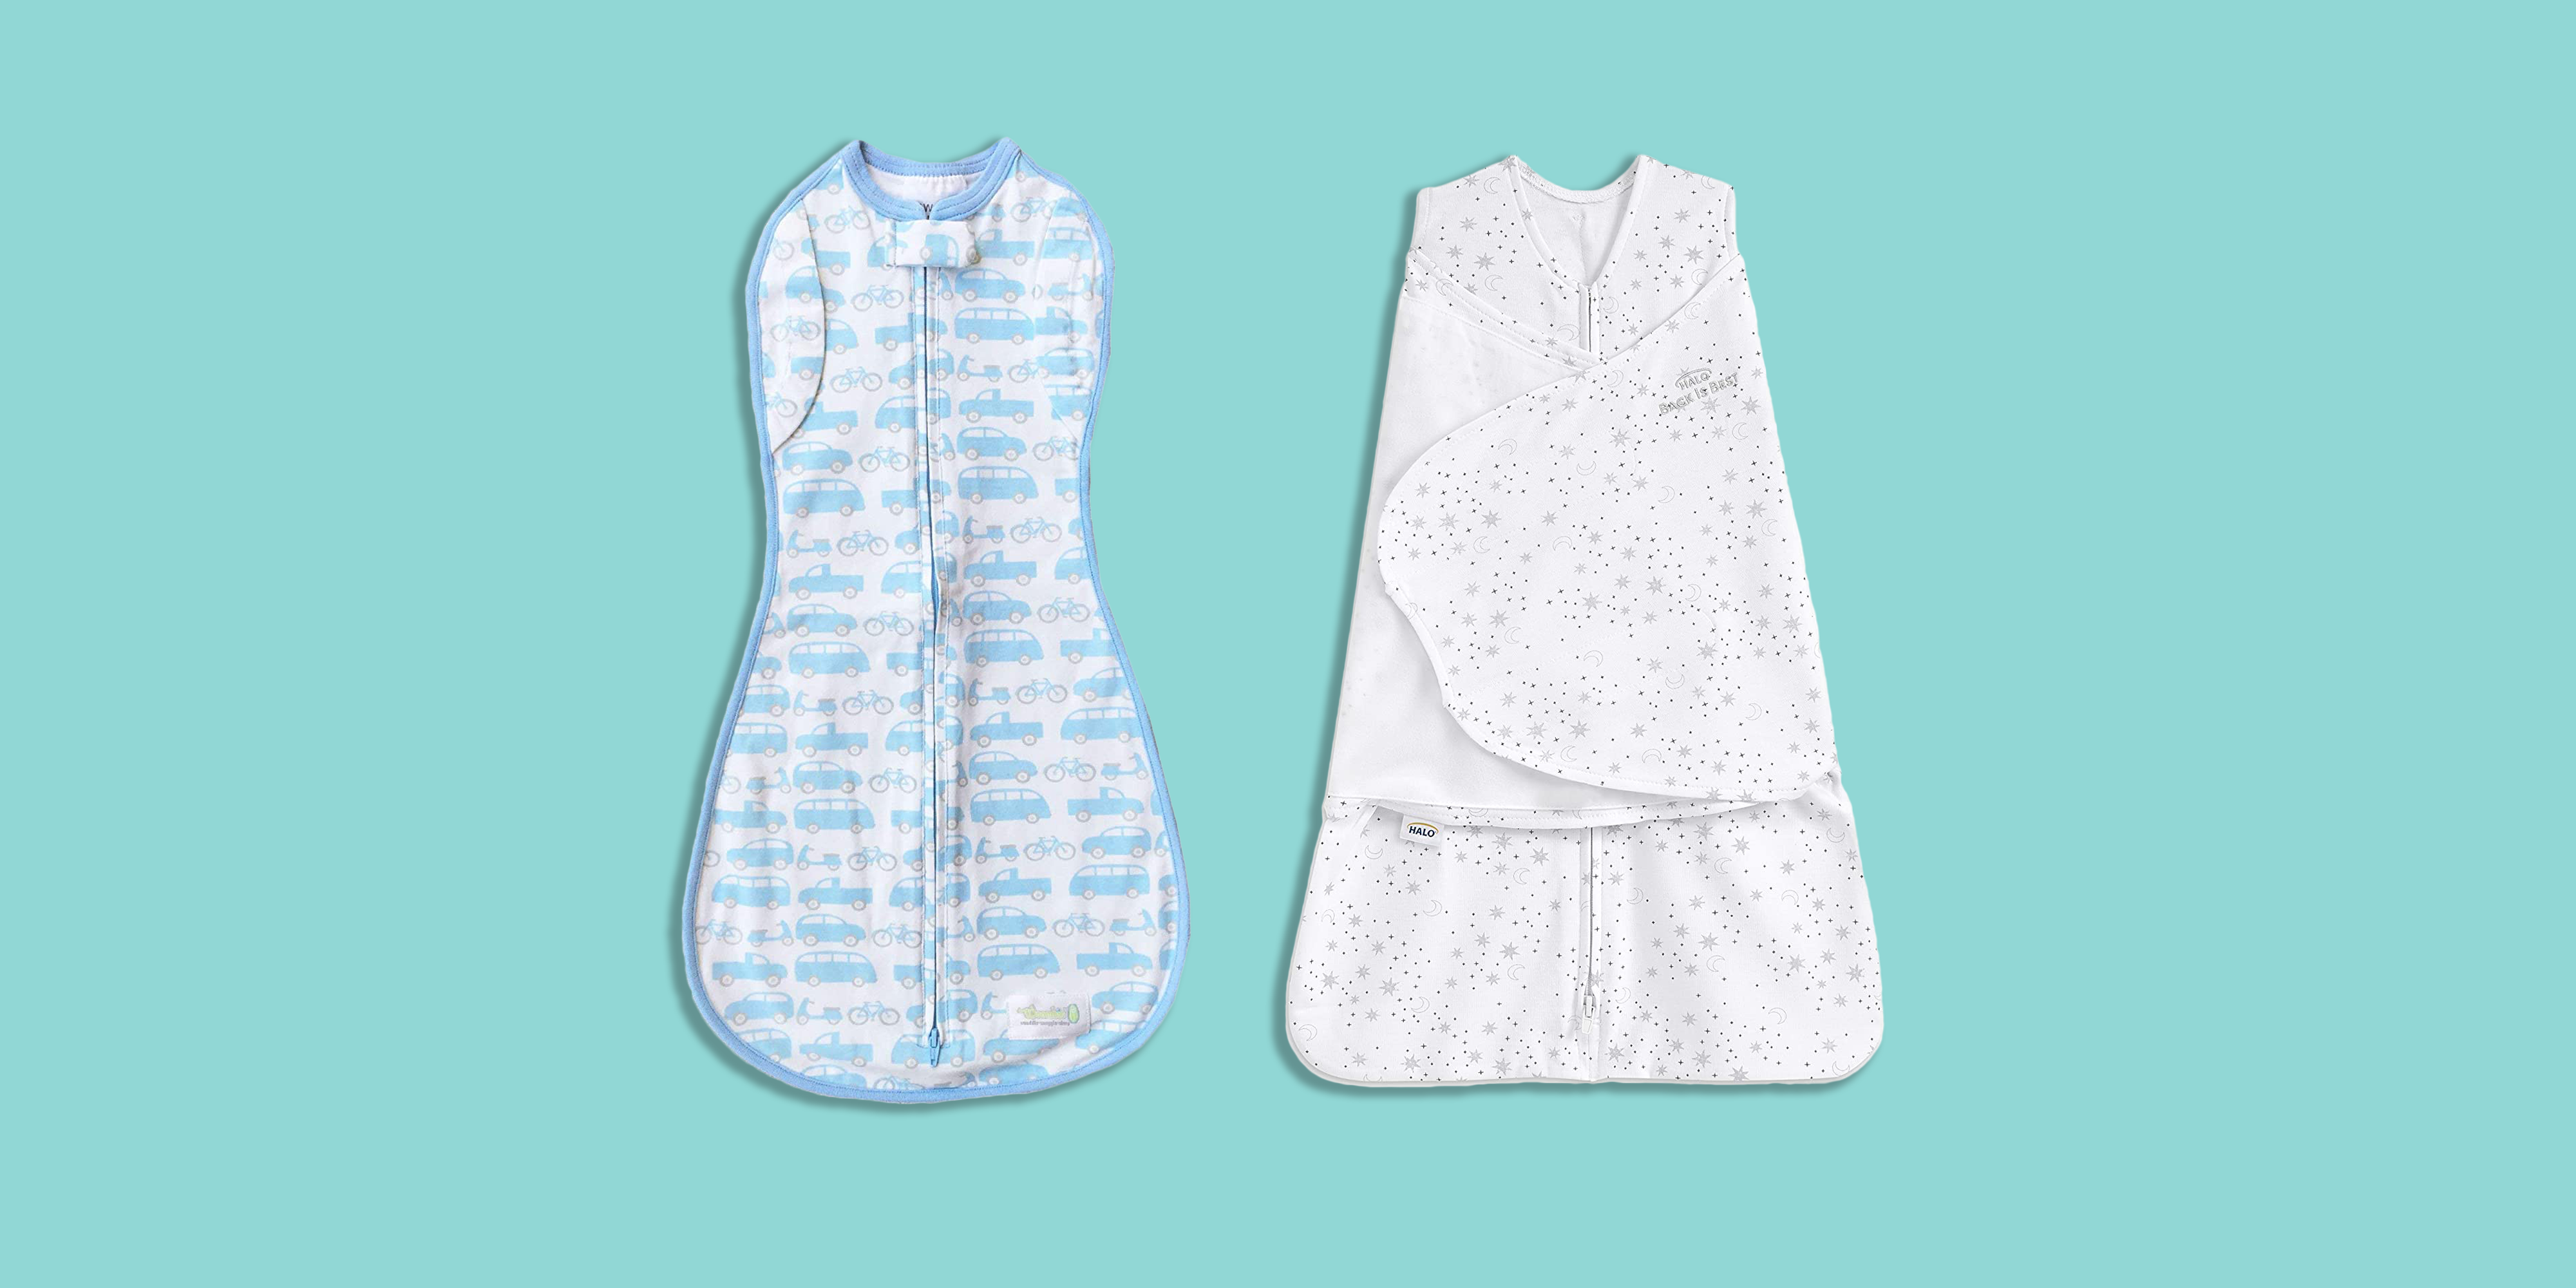 New Born Baby Zipper Swaddle Pod/Blankets/Wrap/Sleeping Sack/Bag